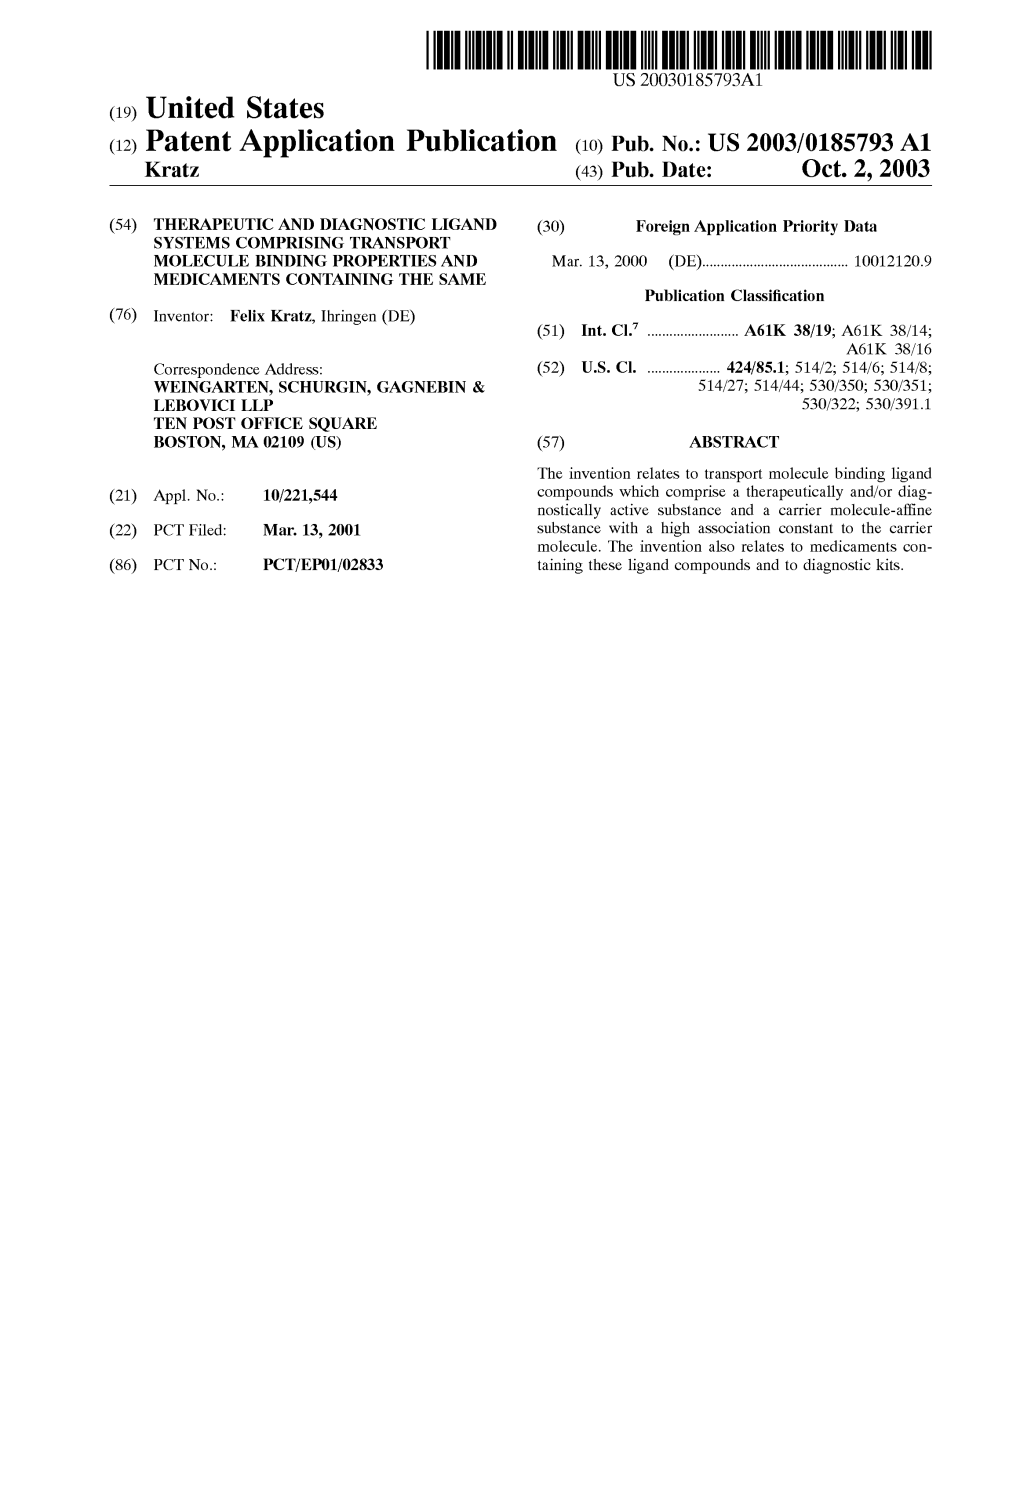 (12) Patent Application Publication (10) Pub. No.: US 2003/0185793 A1 Kratz (43) Pub